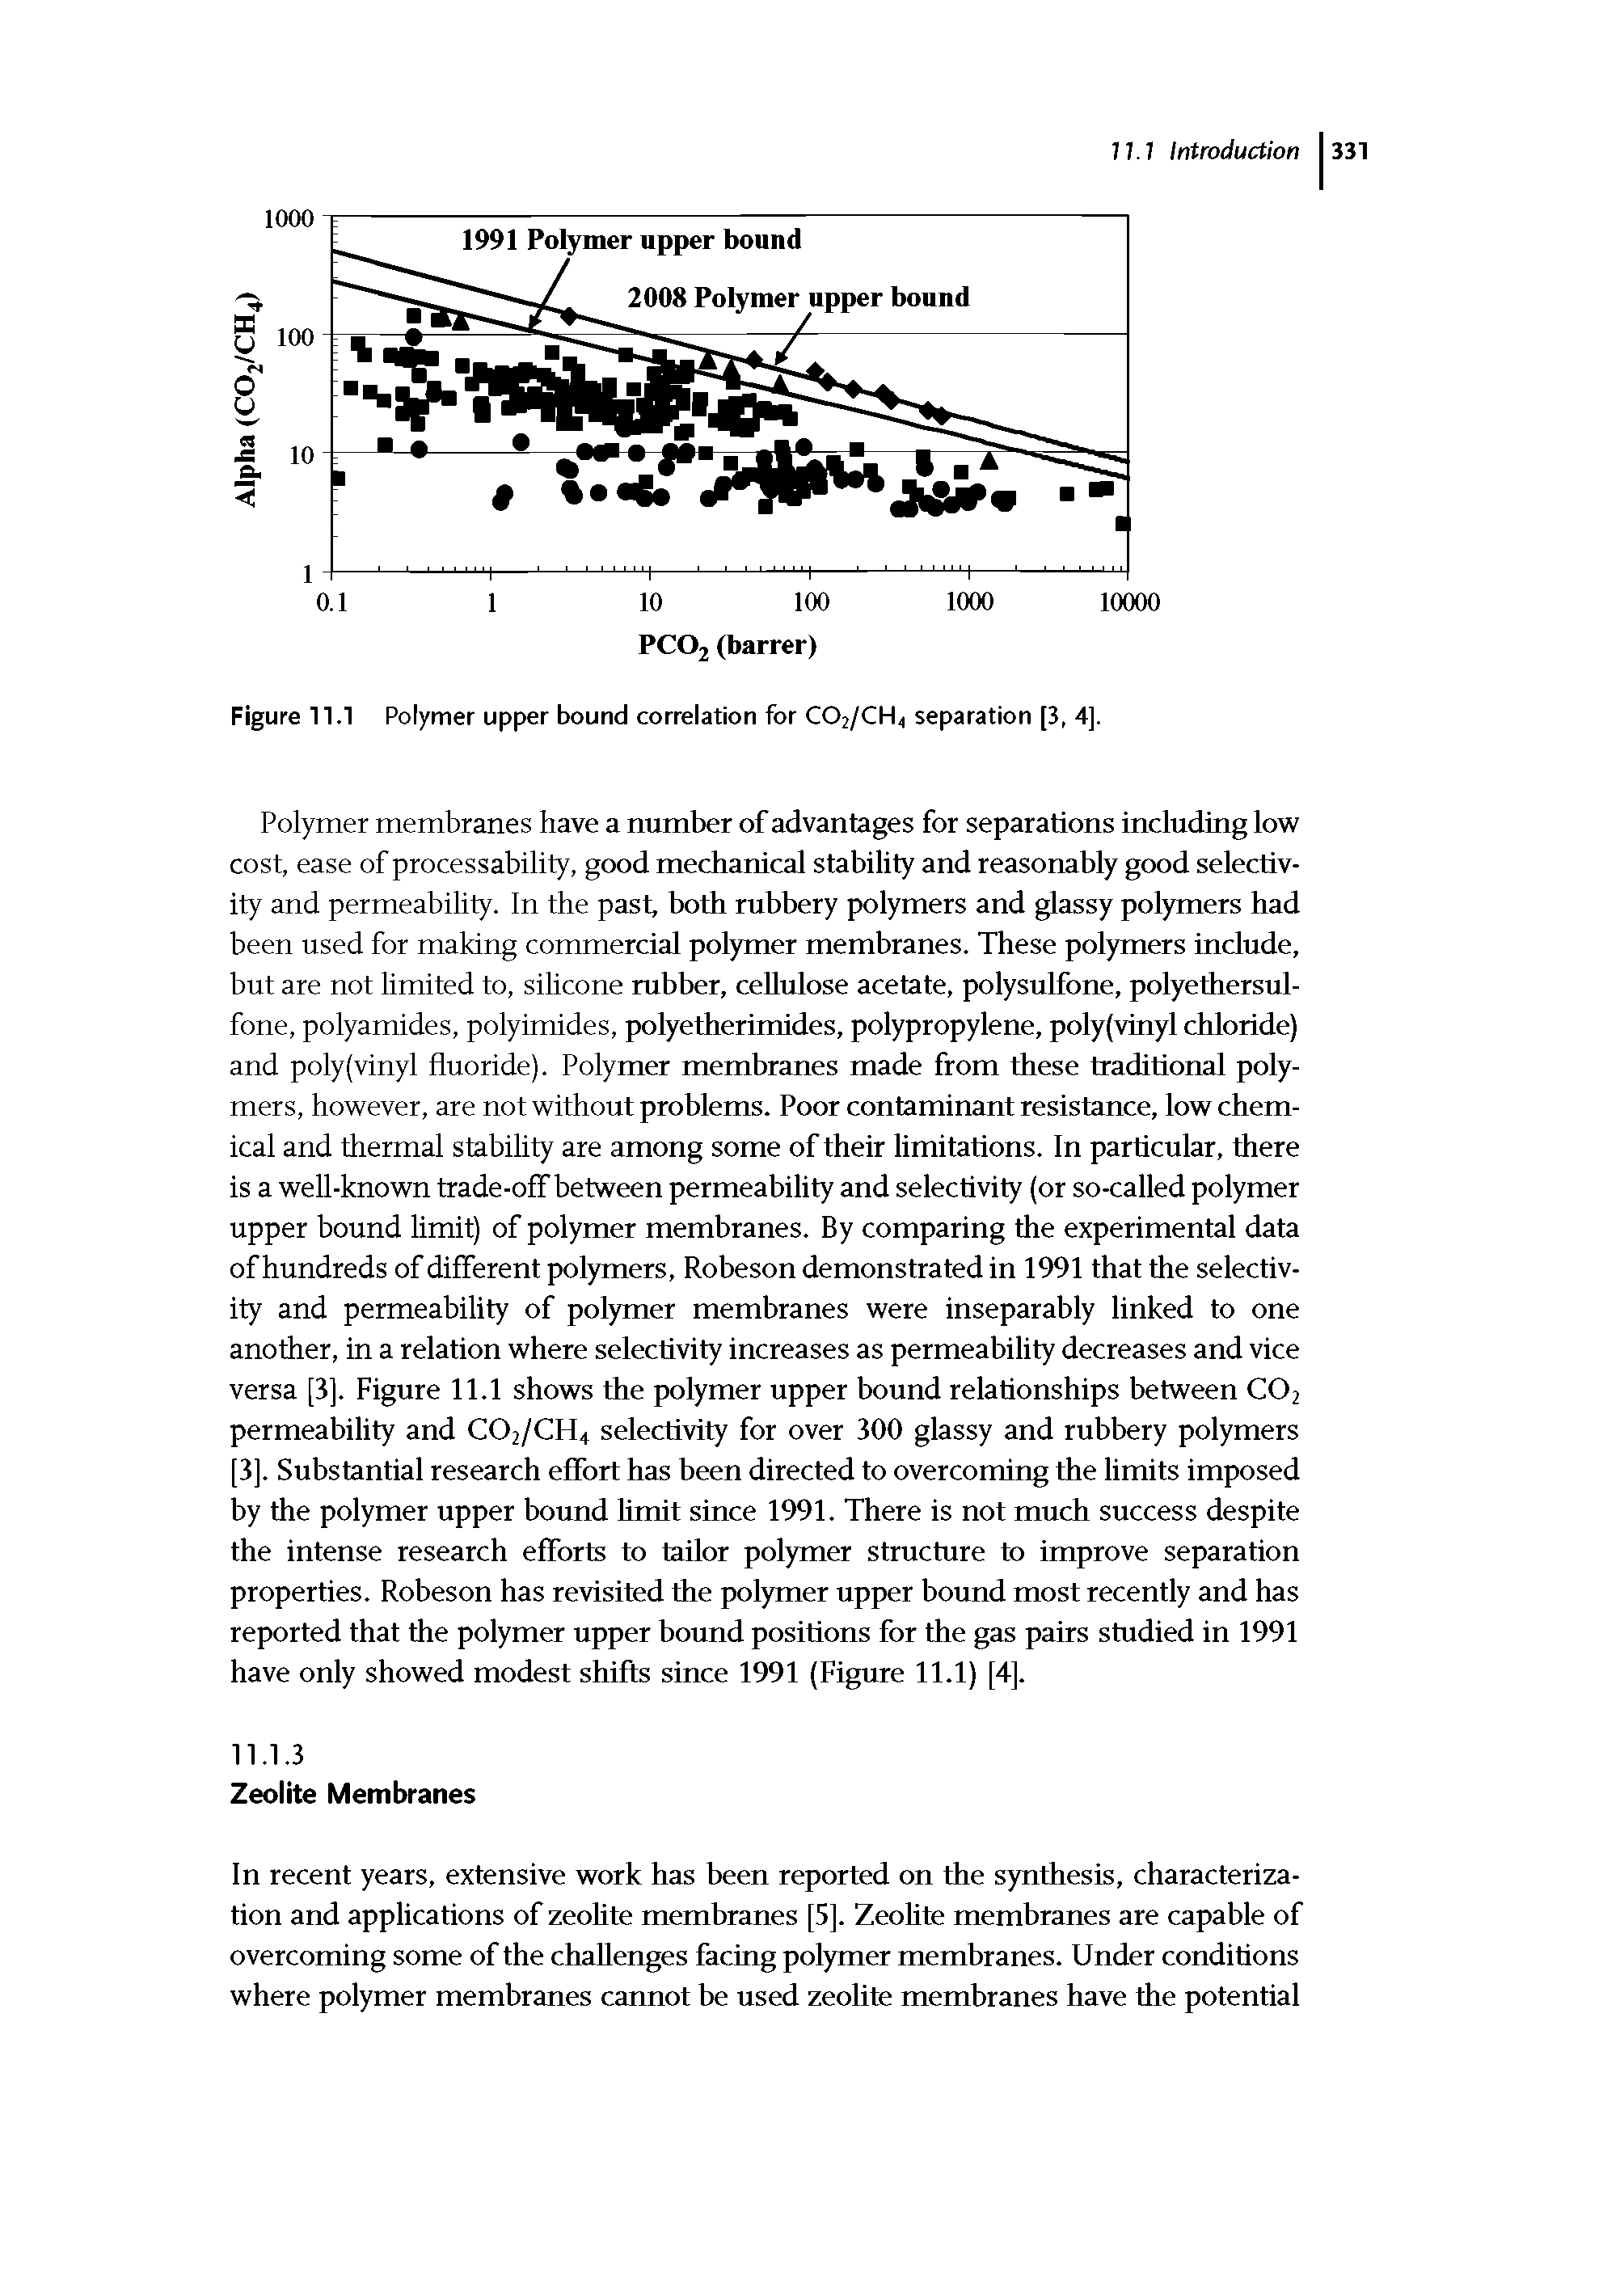 Figure 11.1 Polymer upper bound correlation for C02/CHj separation [3, 4].